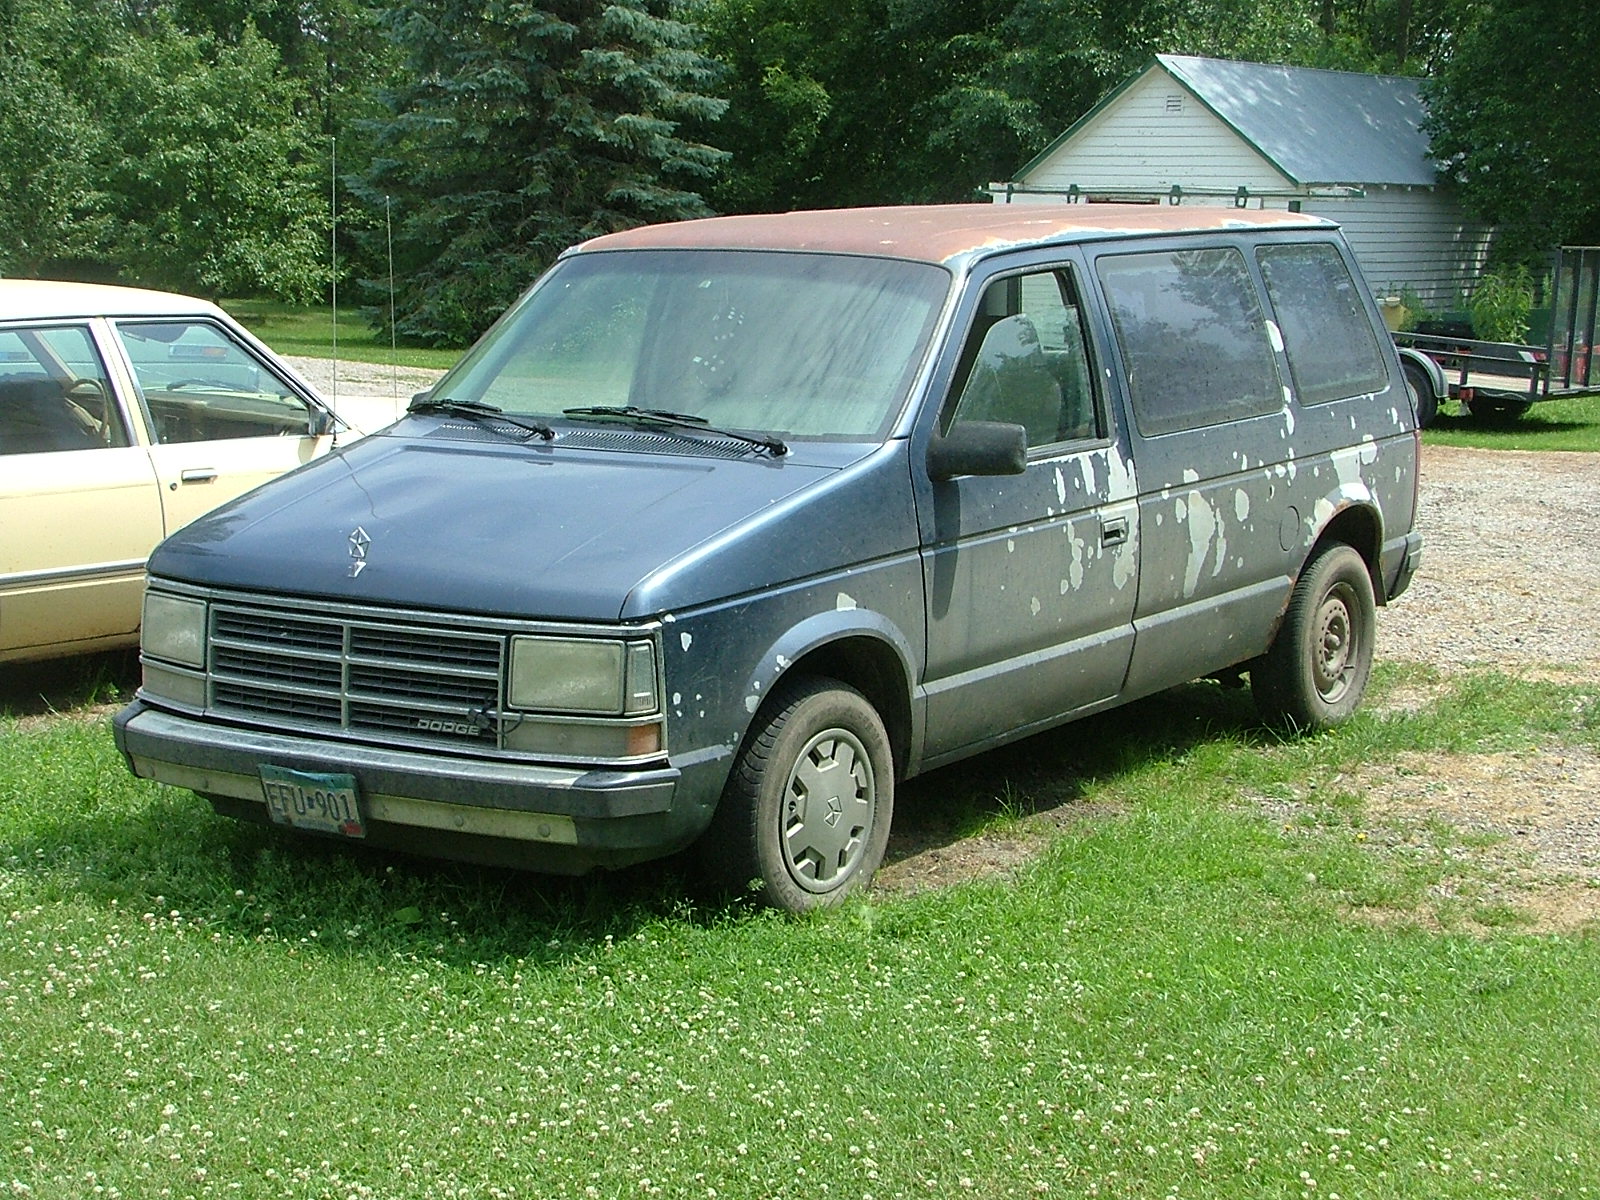 Старого каравана. Dodge Caravan 1990. Додж Караван 1. Dodge Caravan 1990-1995. Chrysler Caravan 1990.